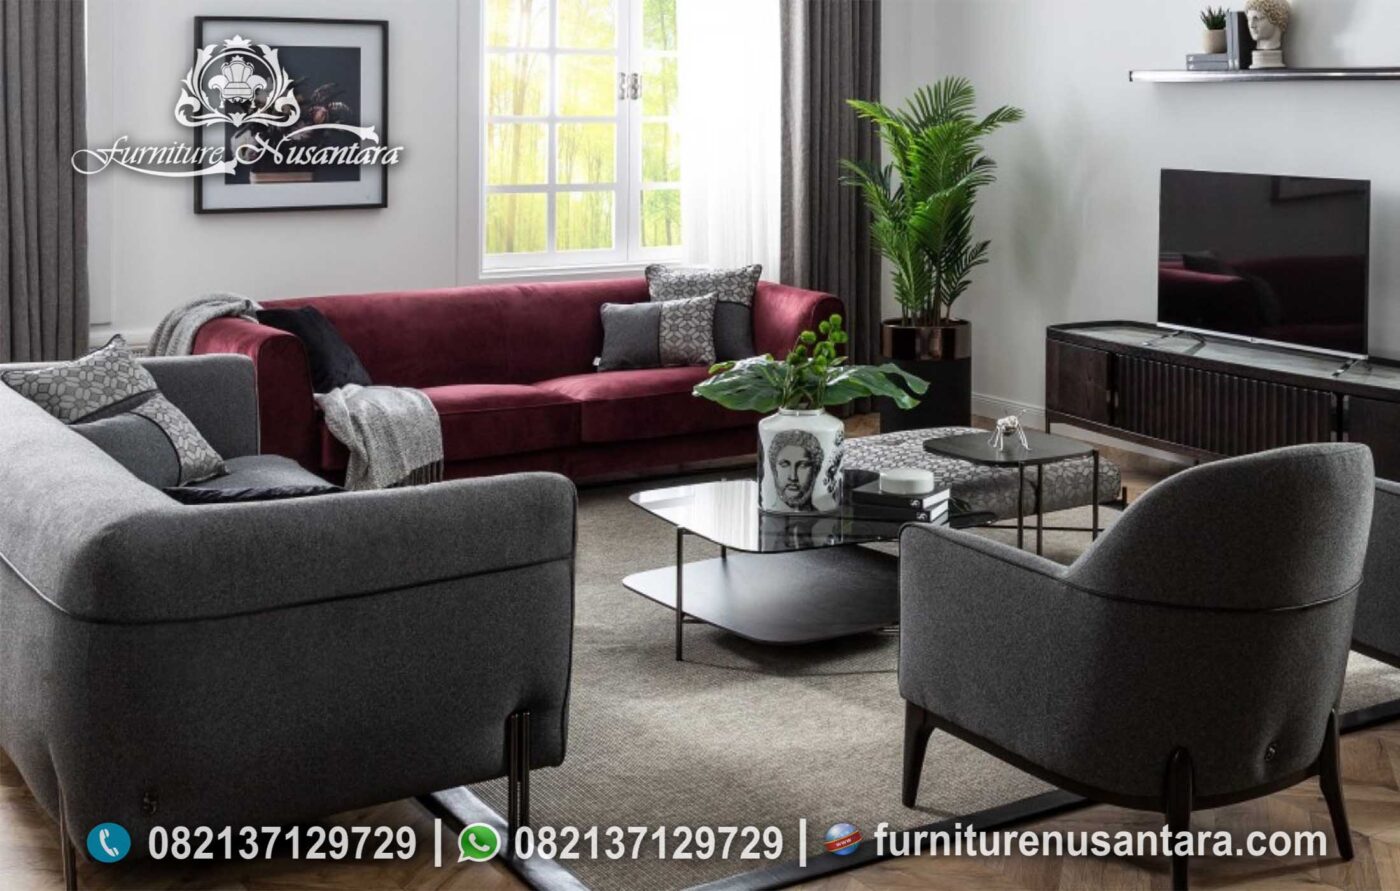 New Desain Sofa Stylist Modern ST-104, Furniture Nusantara